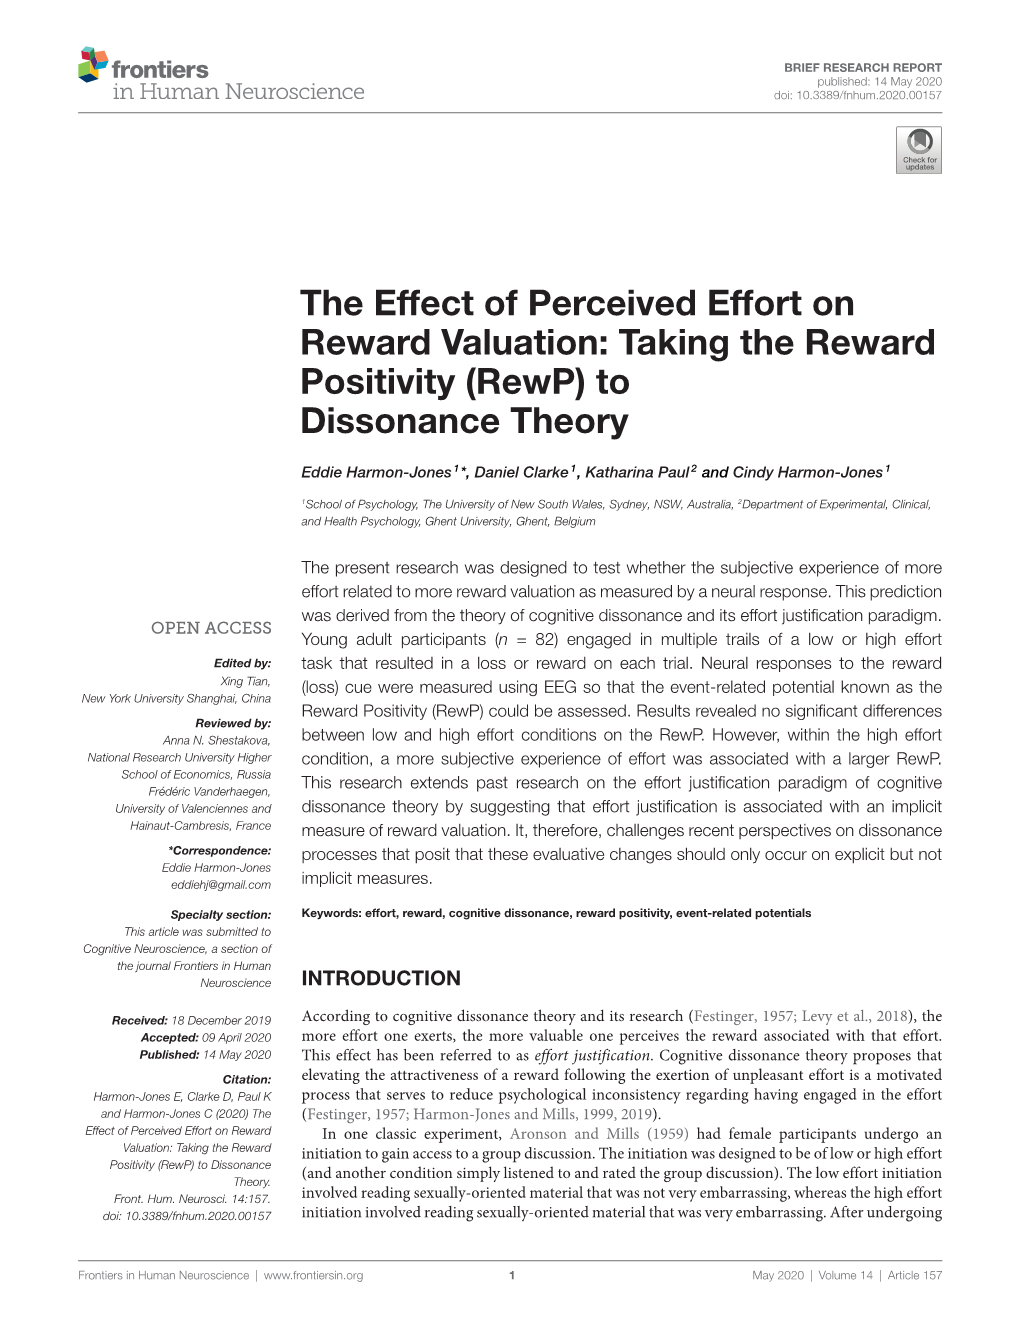 Taking the Reward Positivity (Rewp) to Dissonance Theory